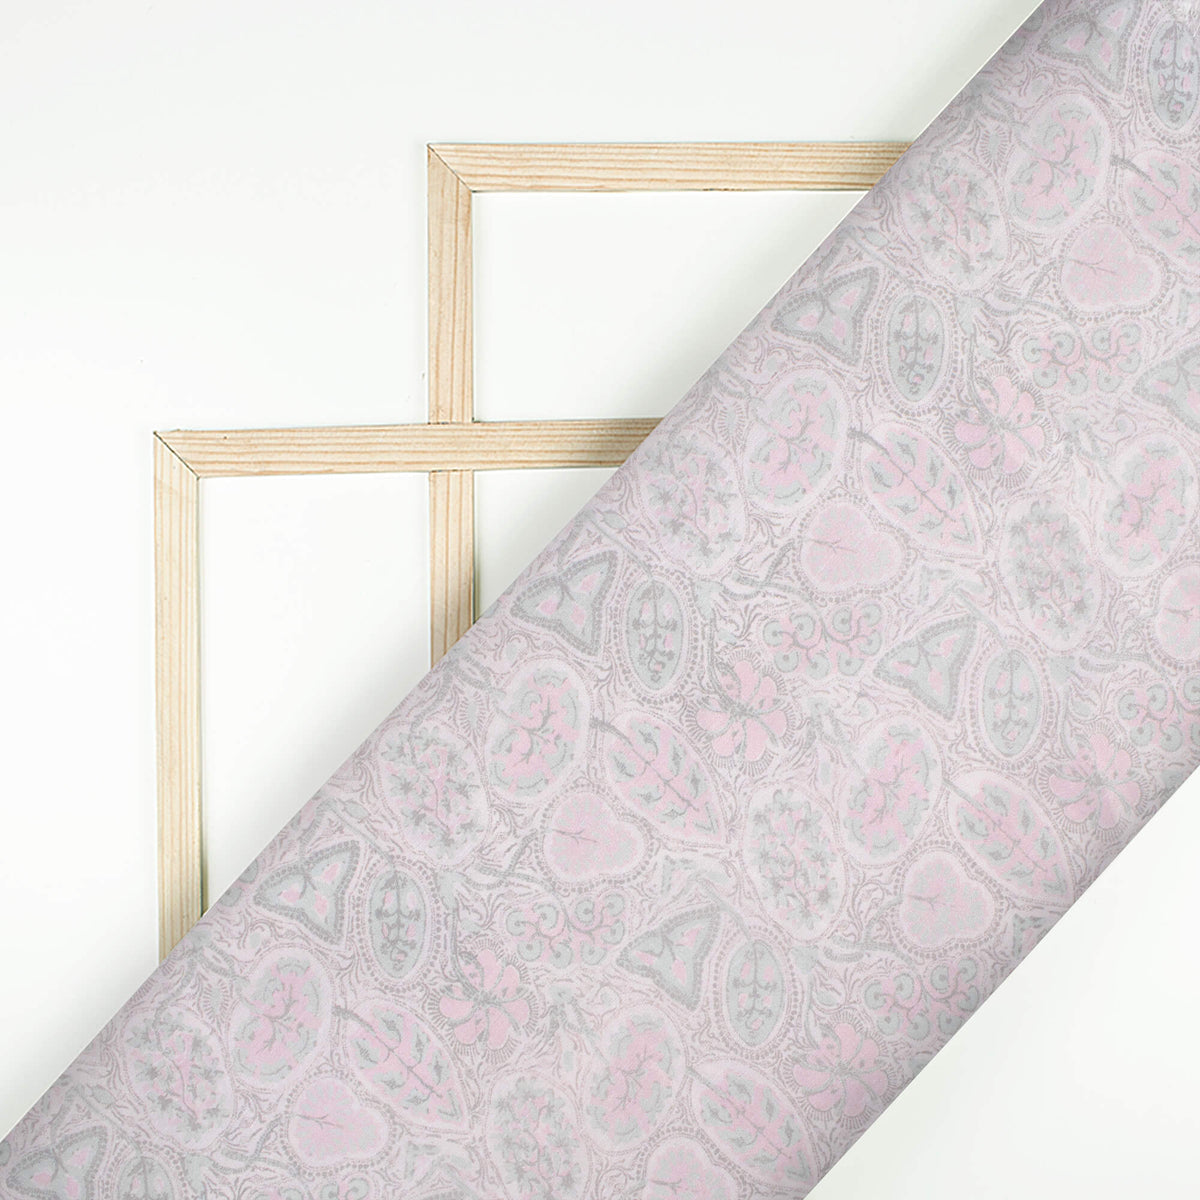 Pastel Pink And Seal Grey Leaf Pattern Digital Print Chanderi Fabric